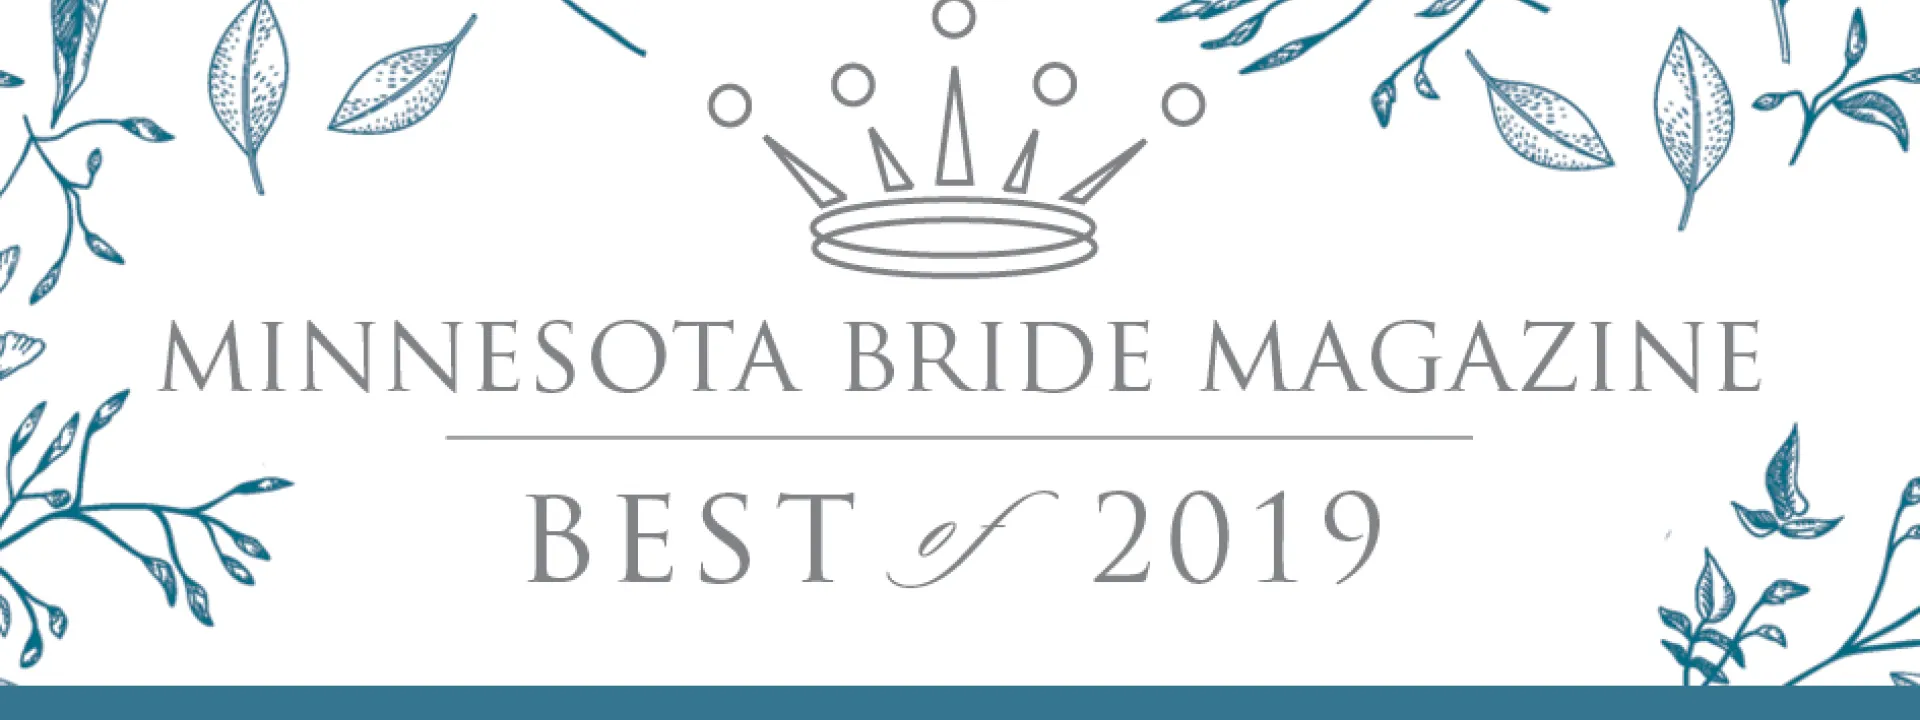 MINNESOTA BRIDE'S BEST OF 2019 - THE FINALISTS